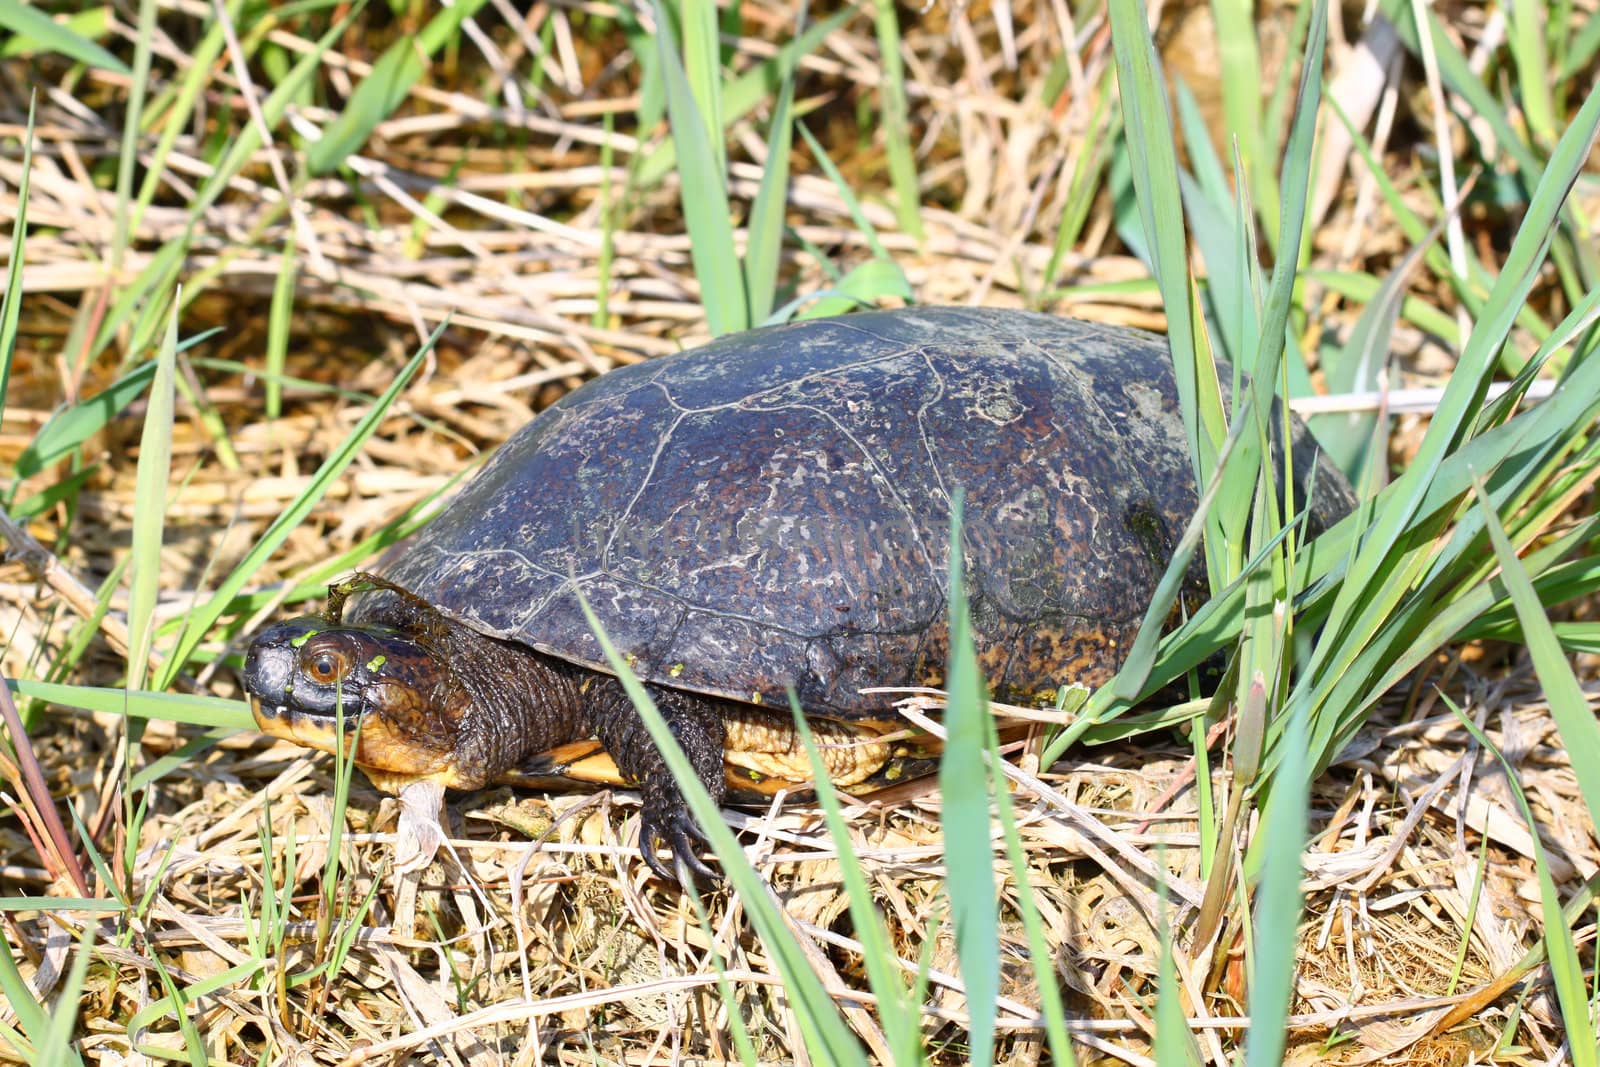 Blandings Turtle (Emydoidea blandingii) crawling through vegetation in northern Illinois.